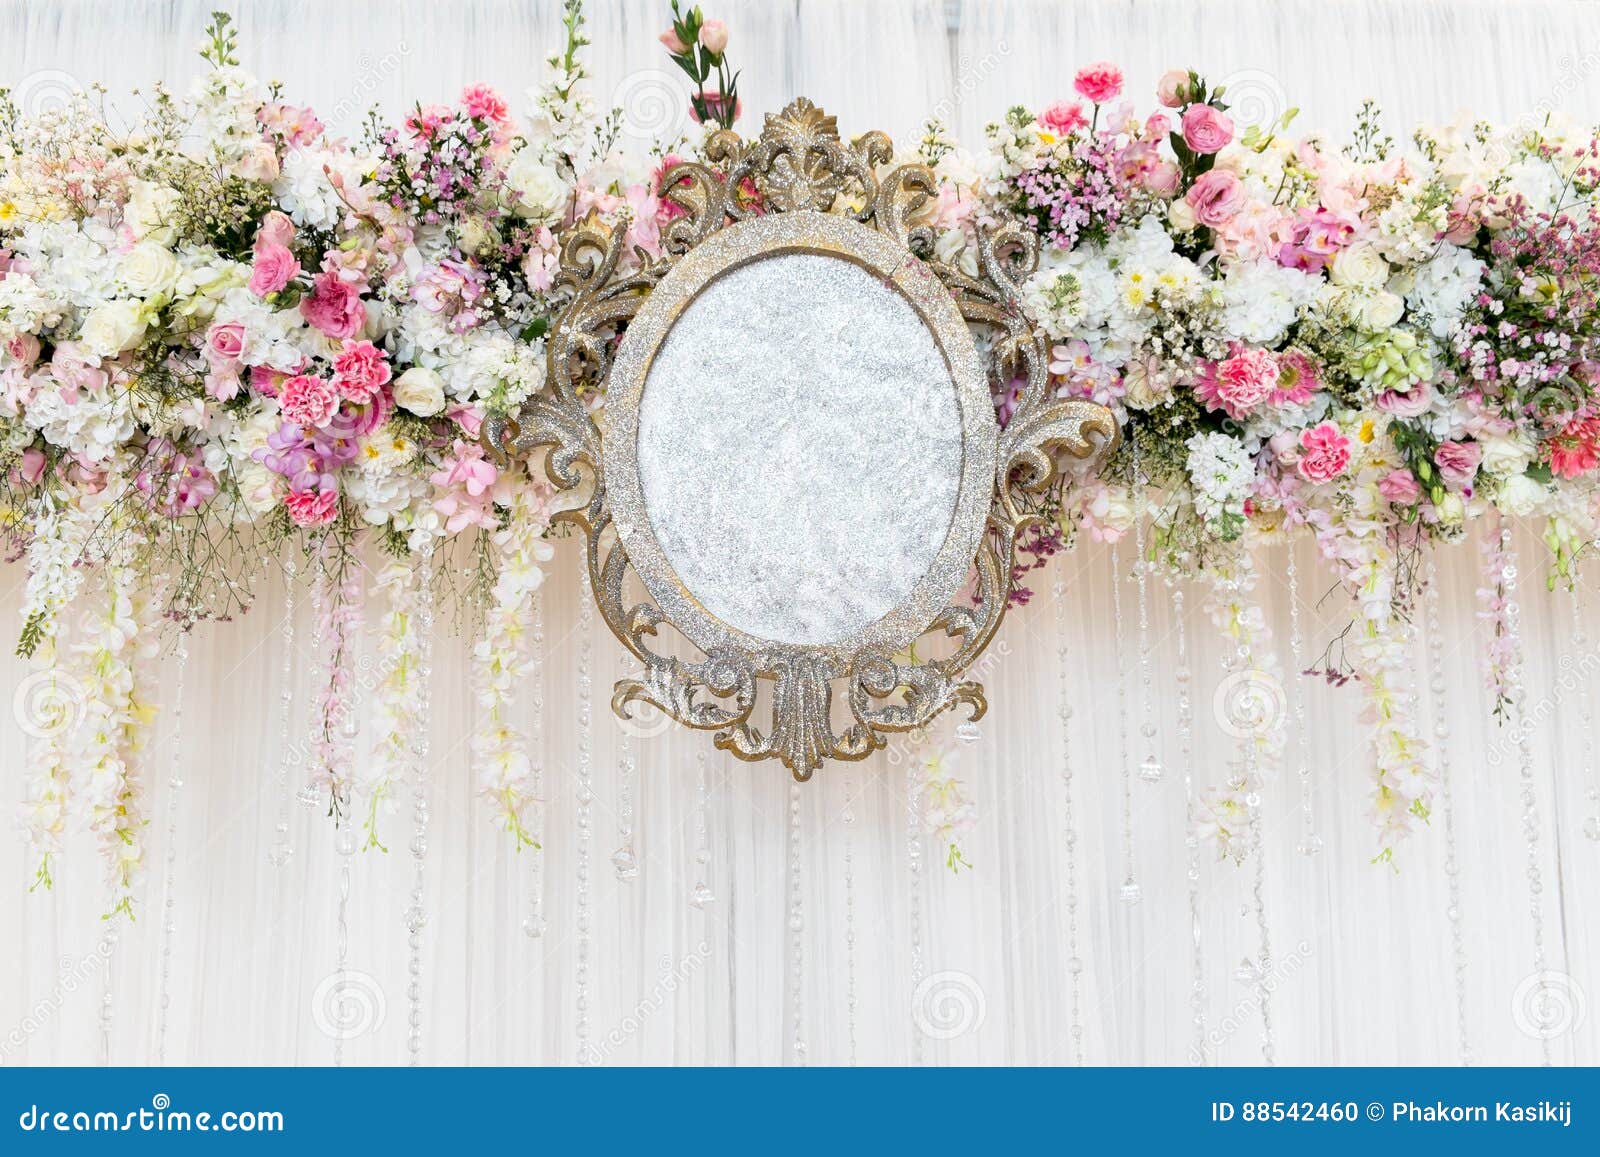 Indoor Wedding Ceremony Backdrop Stock Photo - Image of blossom,  horizontal: 88542460